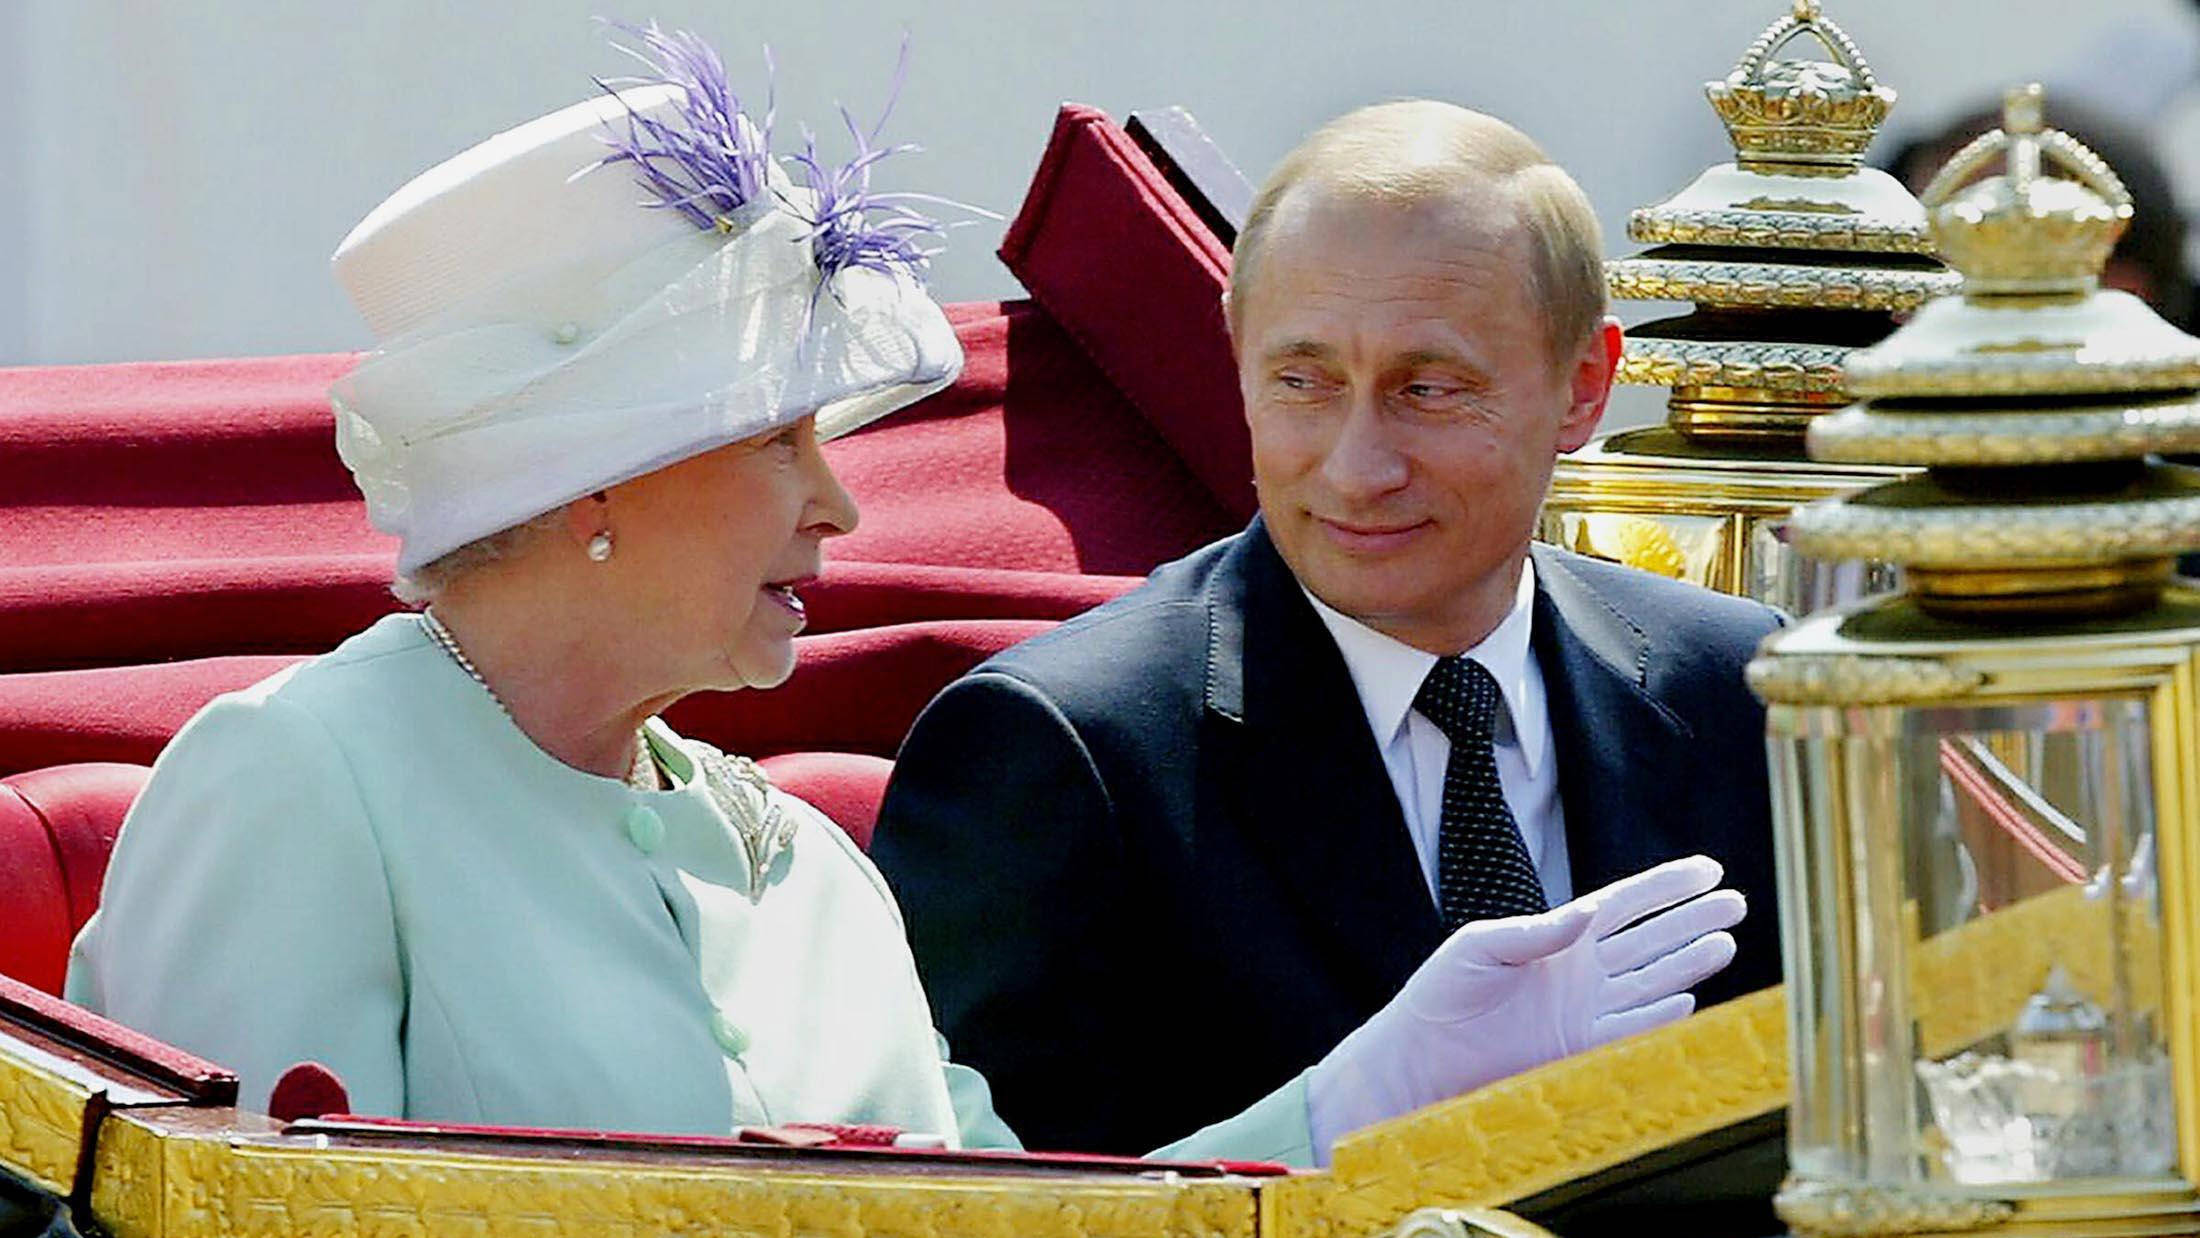 6558?width=2200&crop=16 9&signature=isuOKH kwFzVbnf wwwmqA8hbwM= Королева часто путает Владимира Путина с ветераном журналистики Эндрю Марром